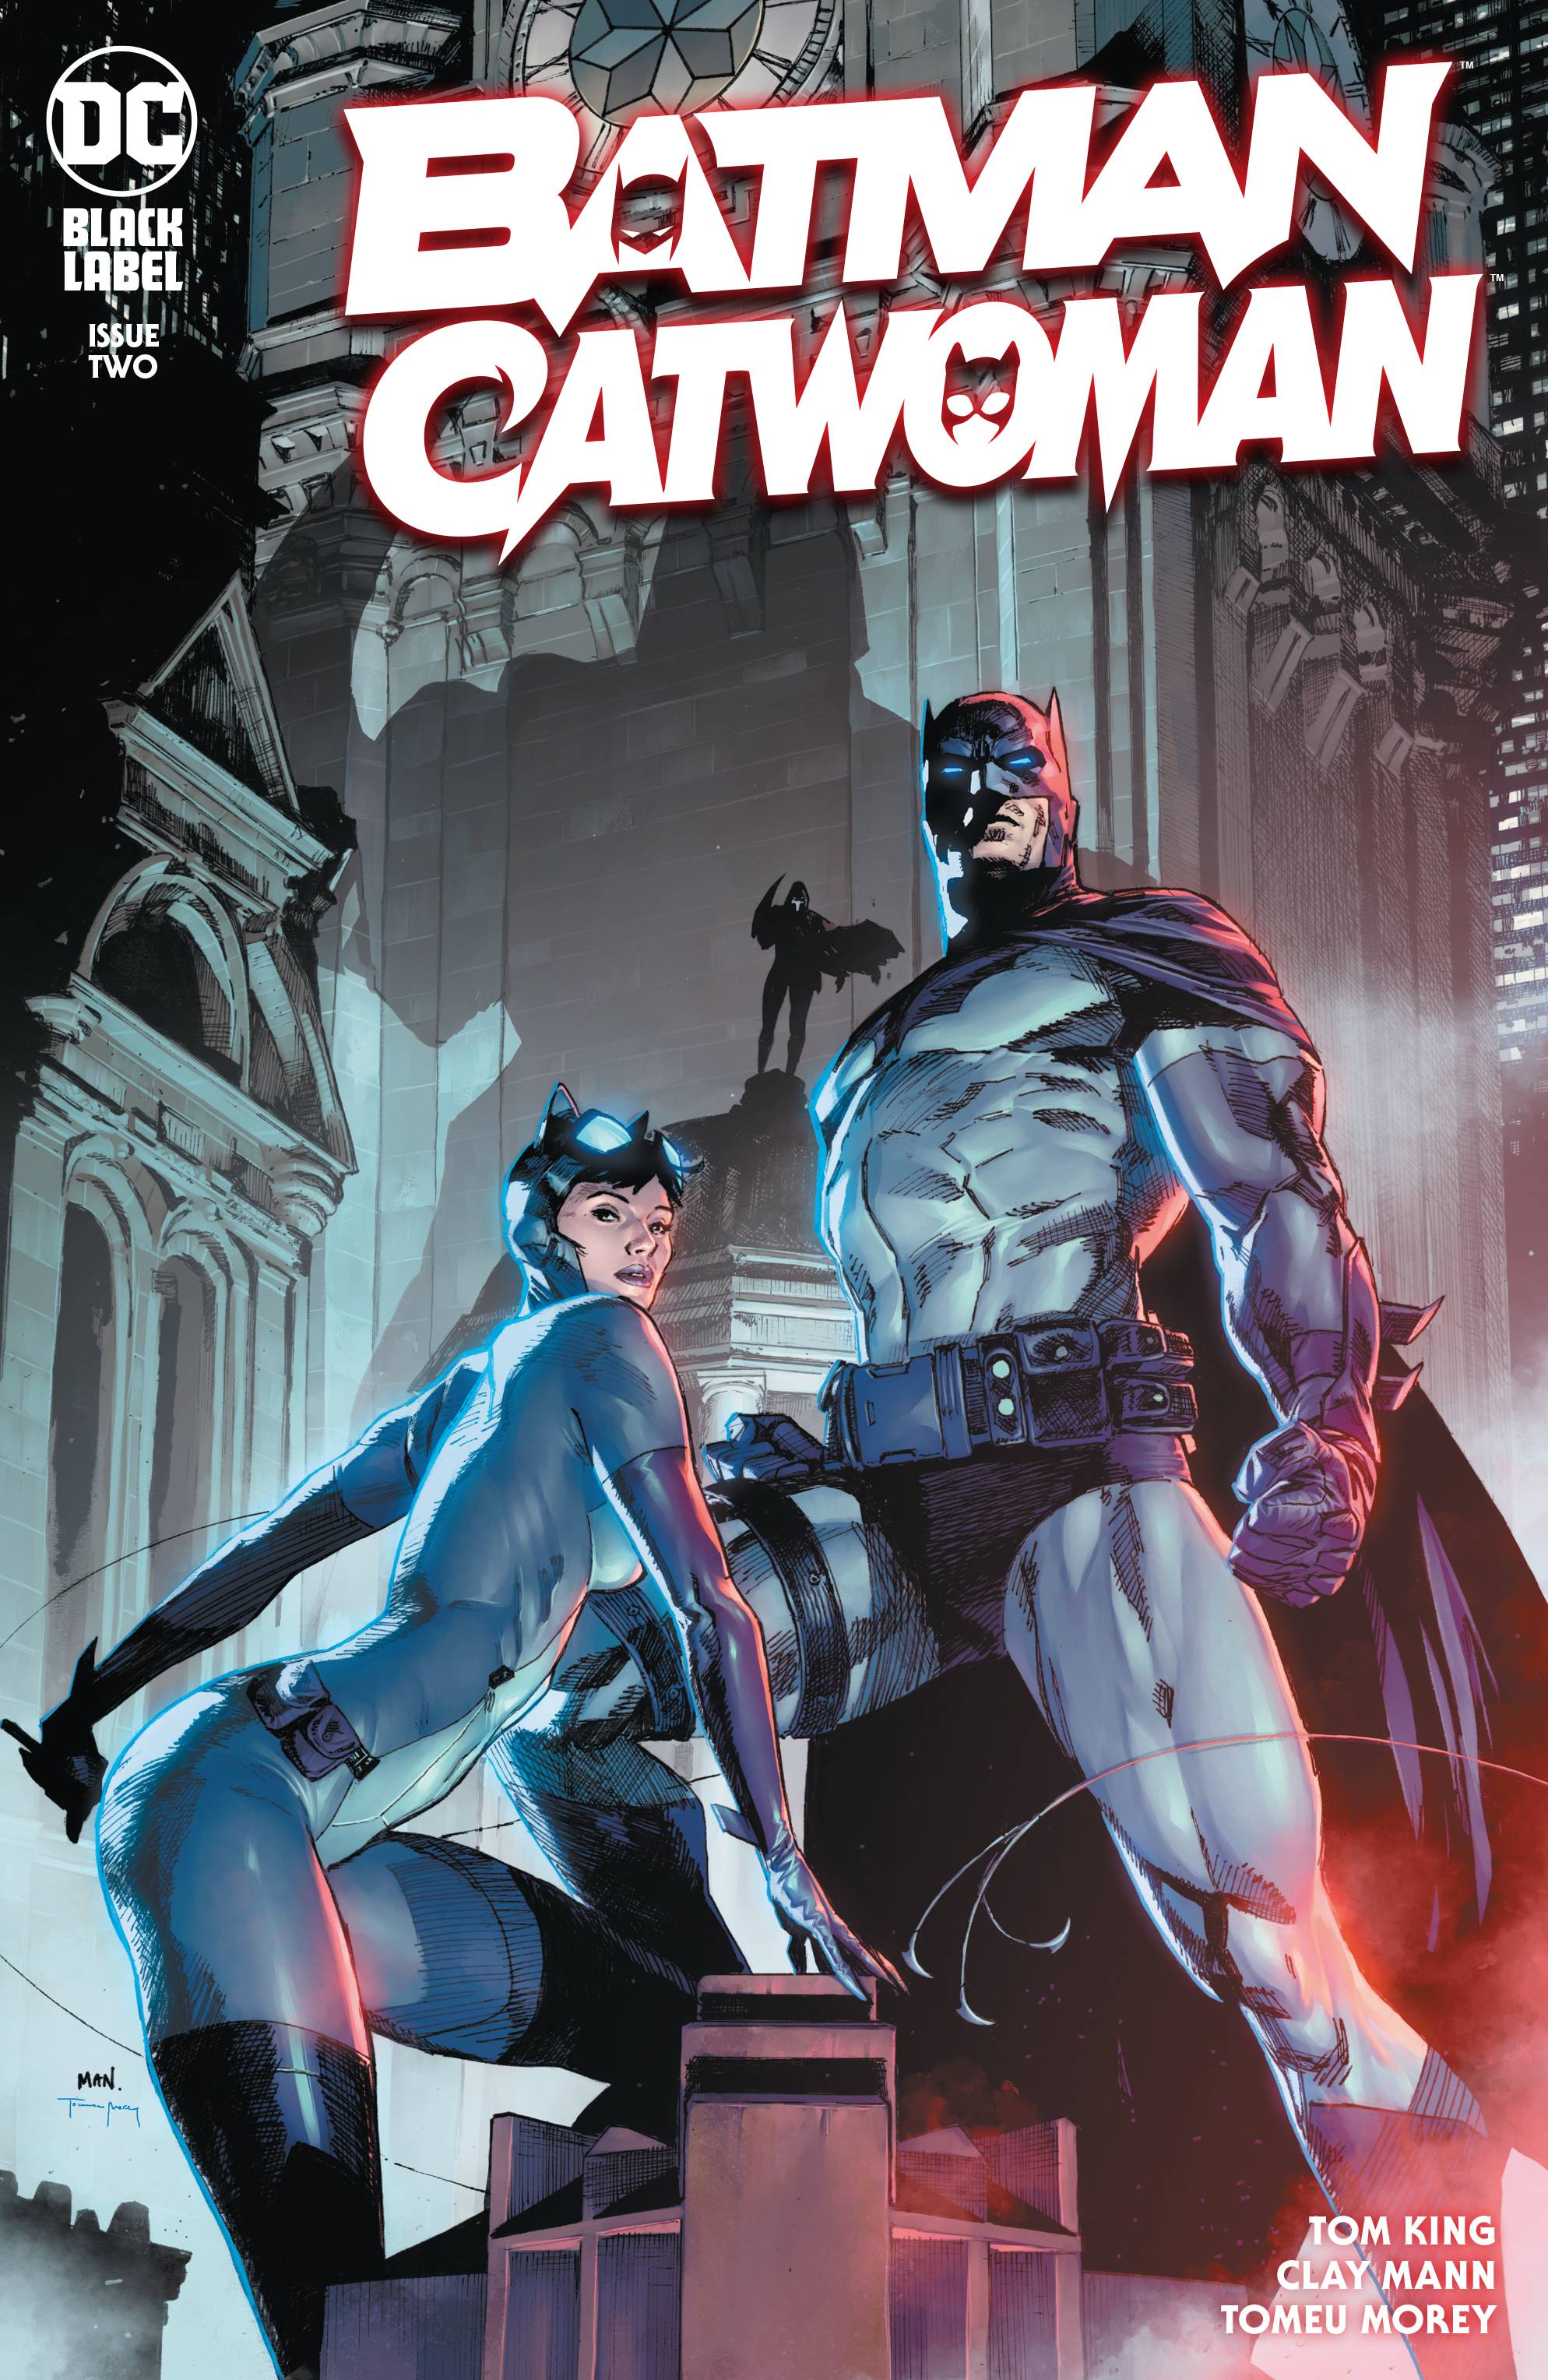 BATMAN CATWOMAN #2 | Game Master's Emporium (The New GME)